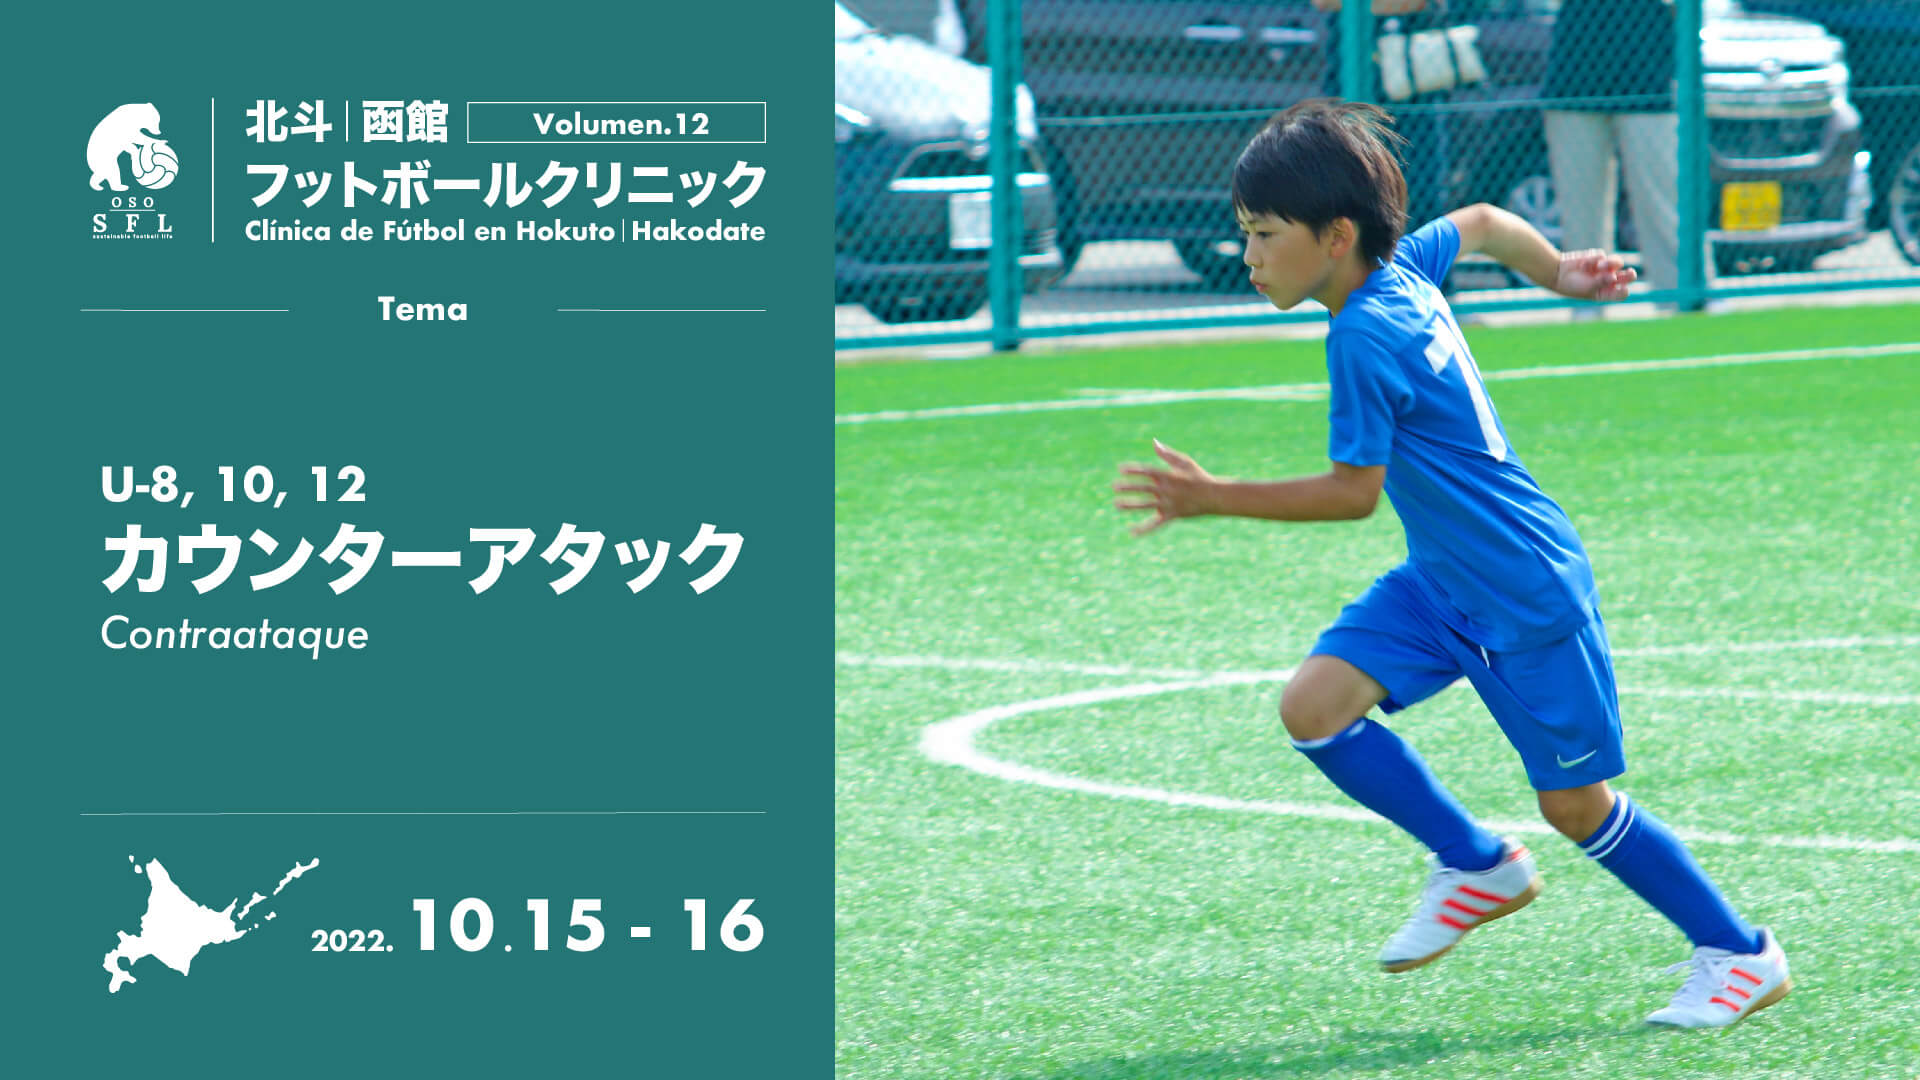 20220927_notice-hokuto-hakodate-football-clinic-2022-vol12